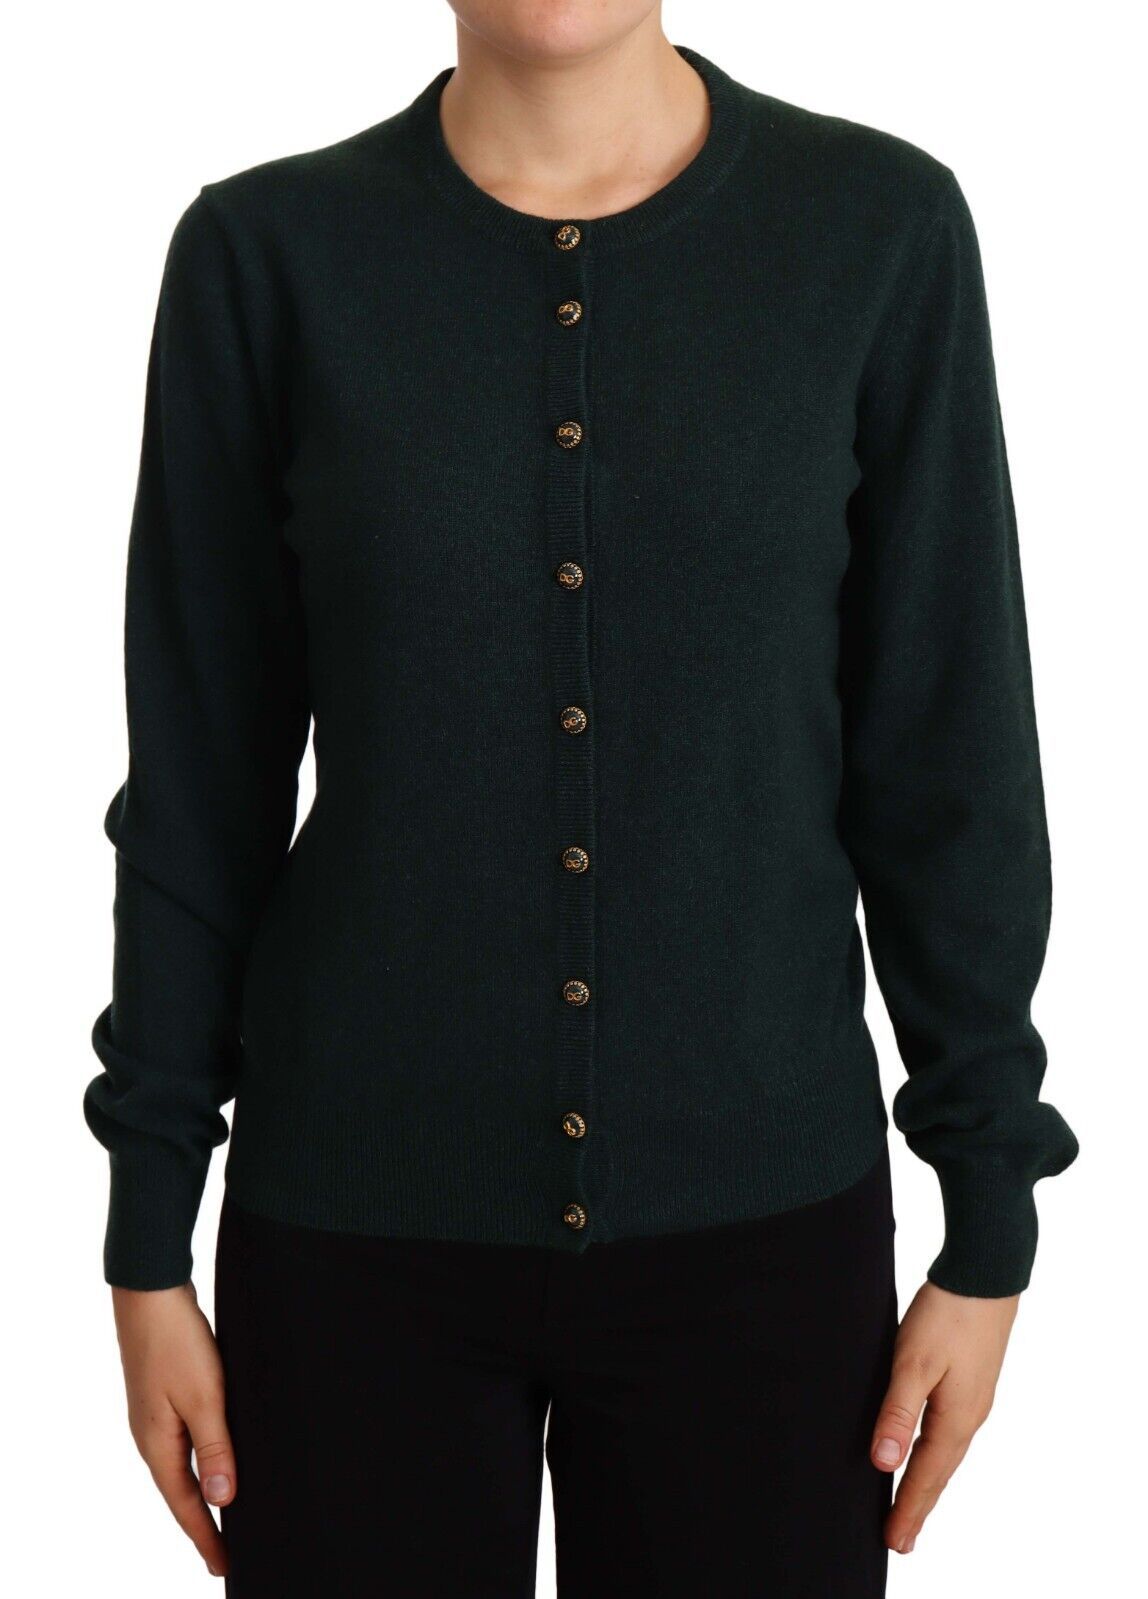 Dolce & Gabbana Green Cashmere DG Buttons Cardigan Sweater